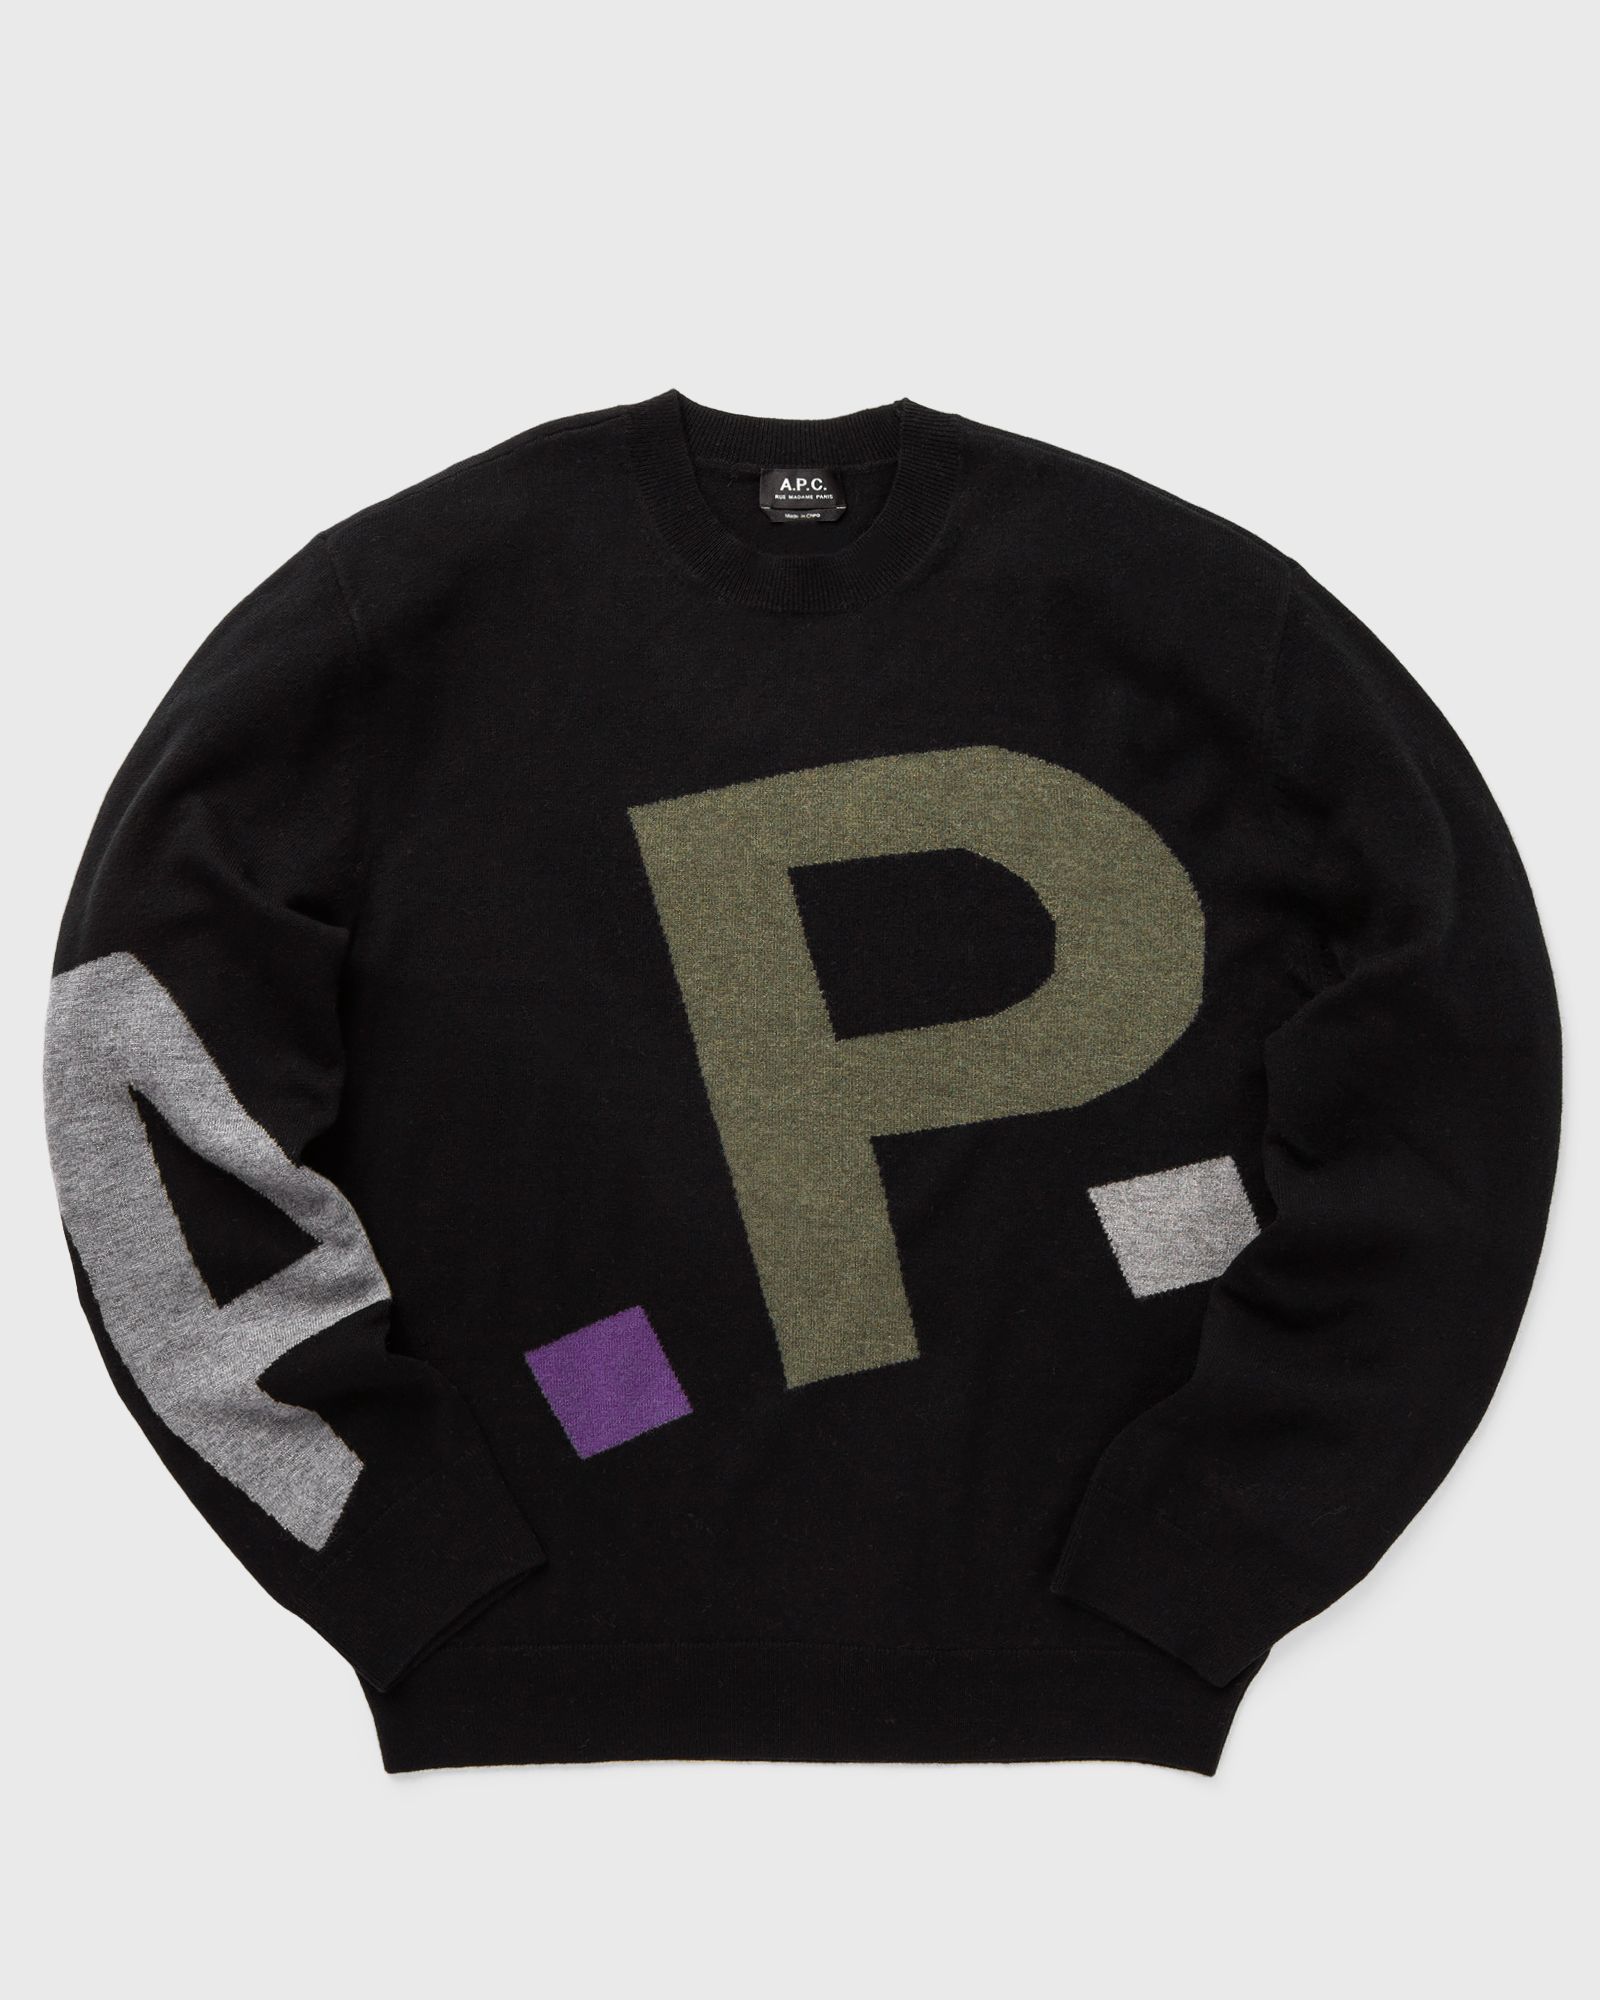 A.P.C. - pull logo all over h men pullovers black in größe:l